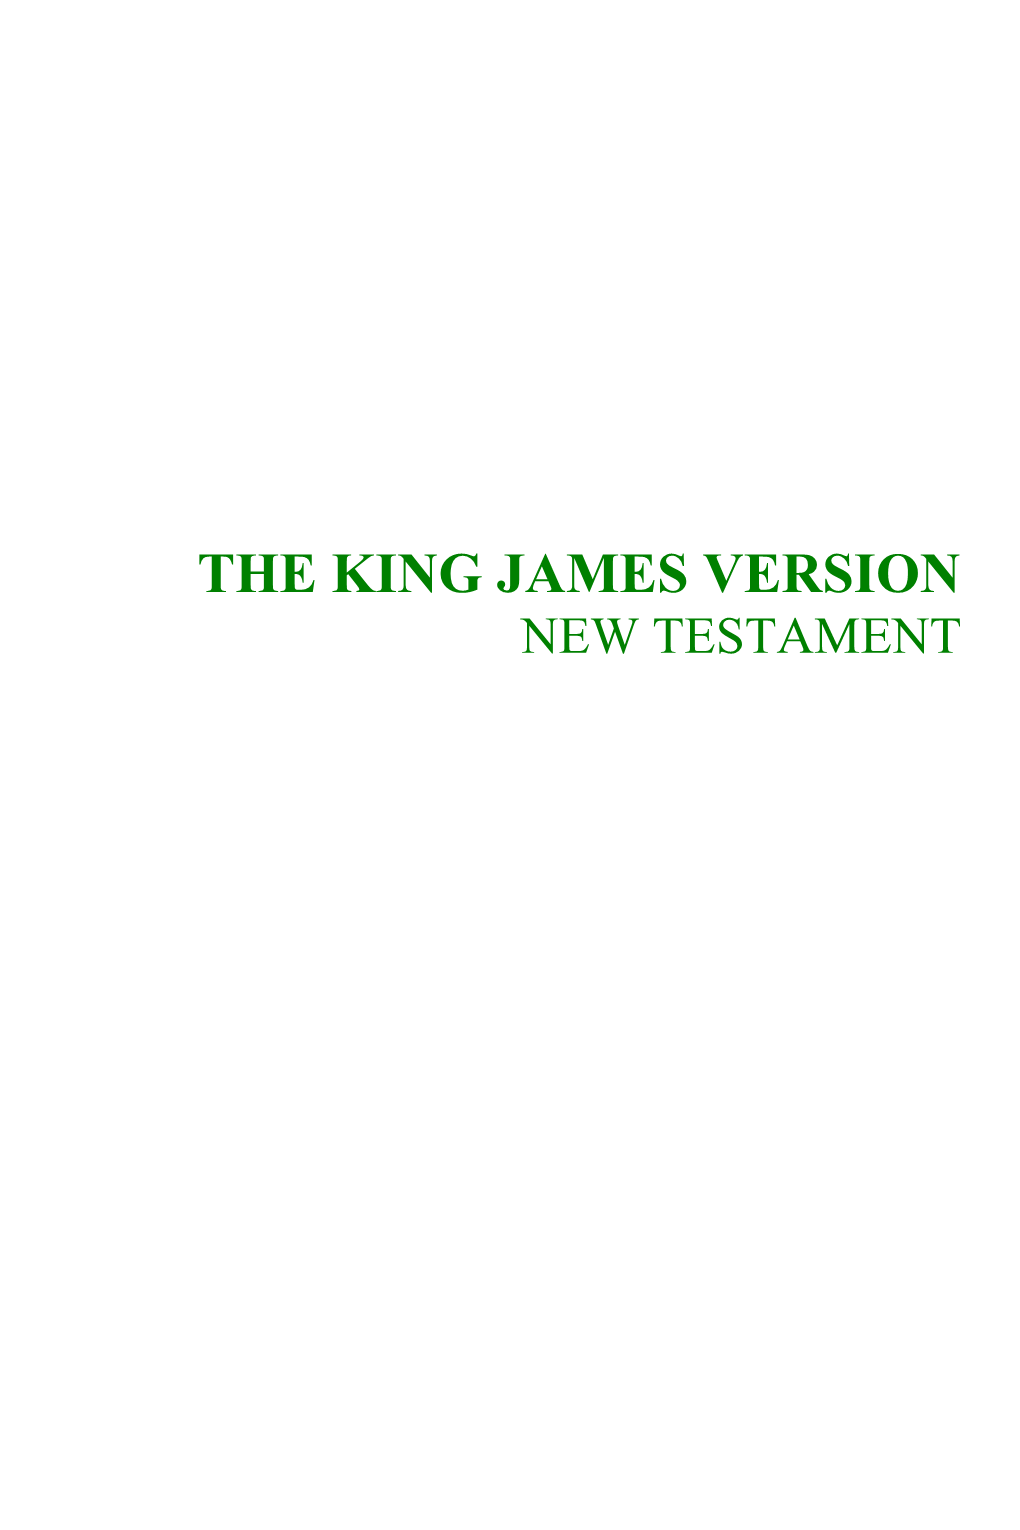 King James Version New Testament 2 Matthew